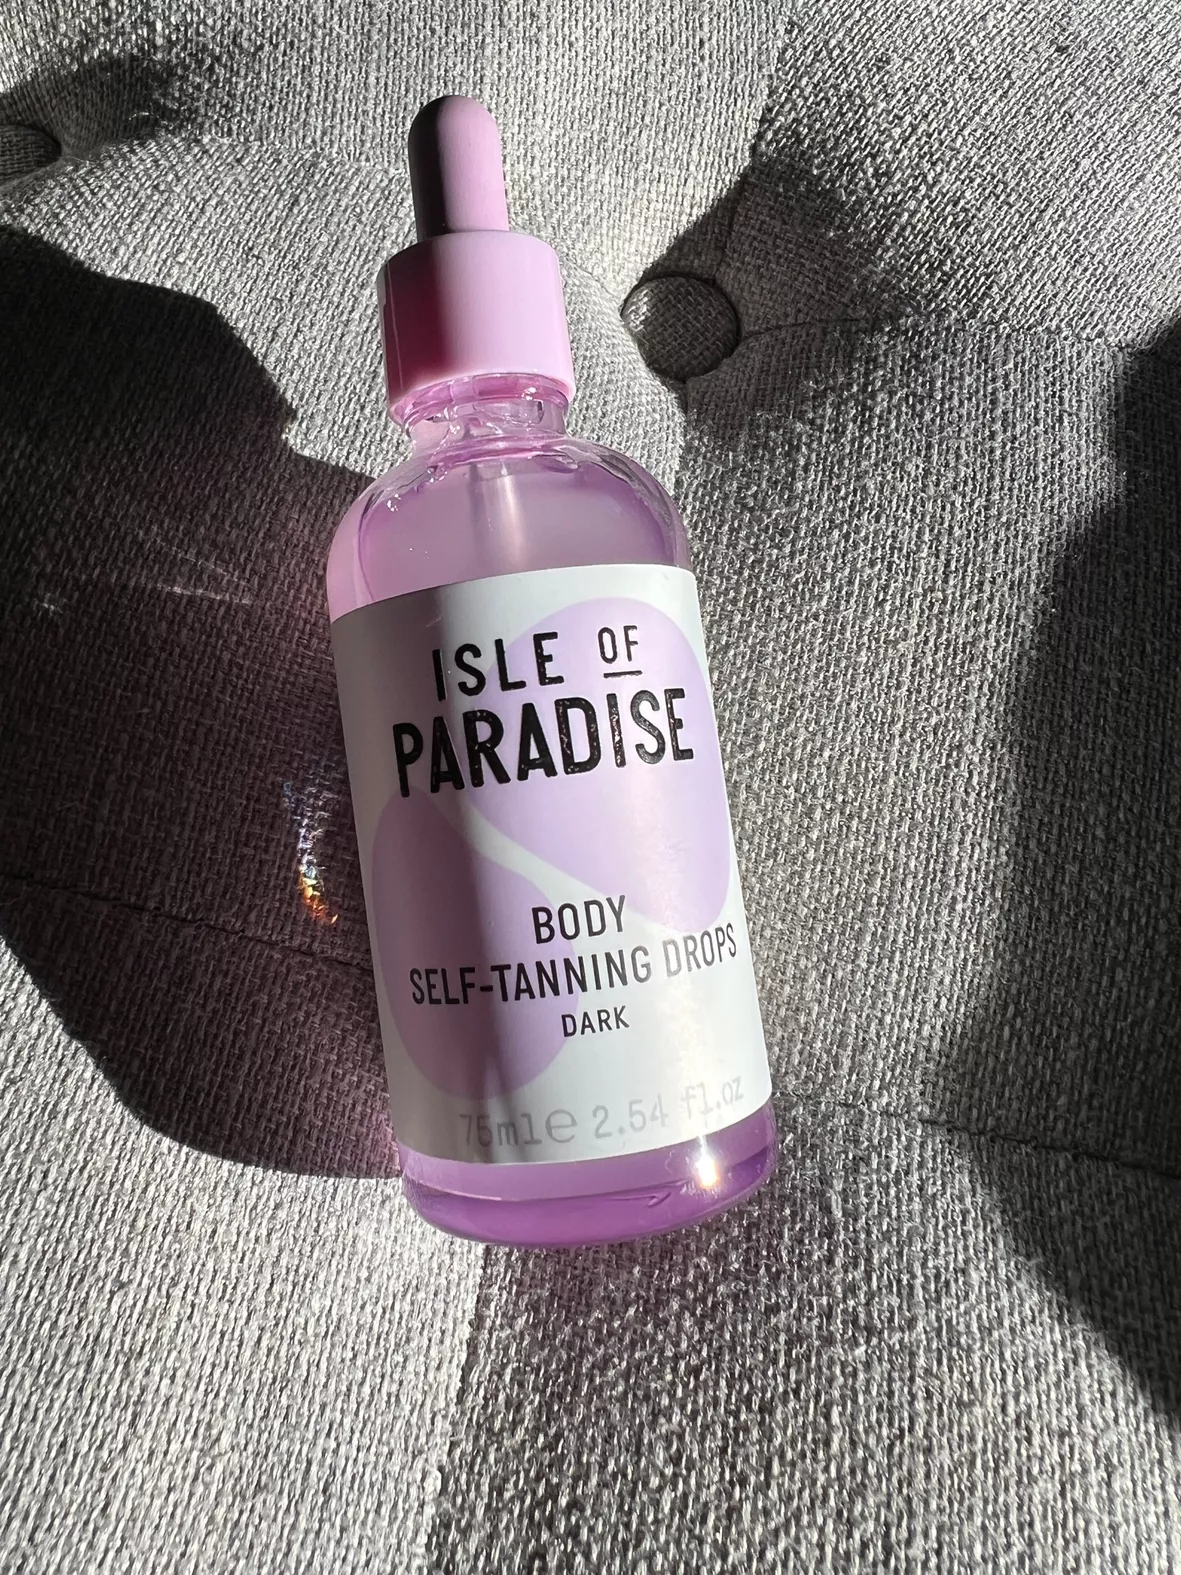 Isle of Paradise Self-Tanning Body Drops Dark